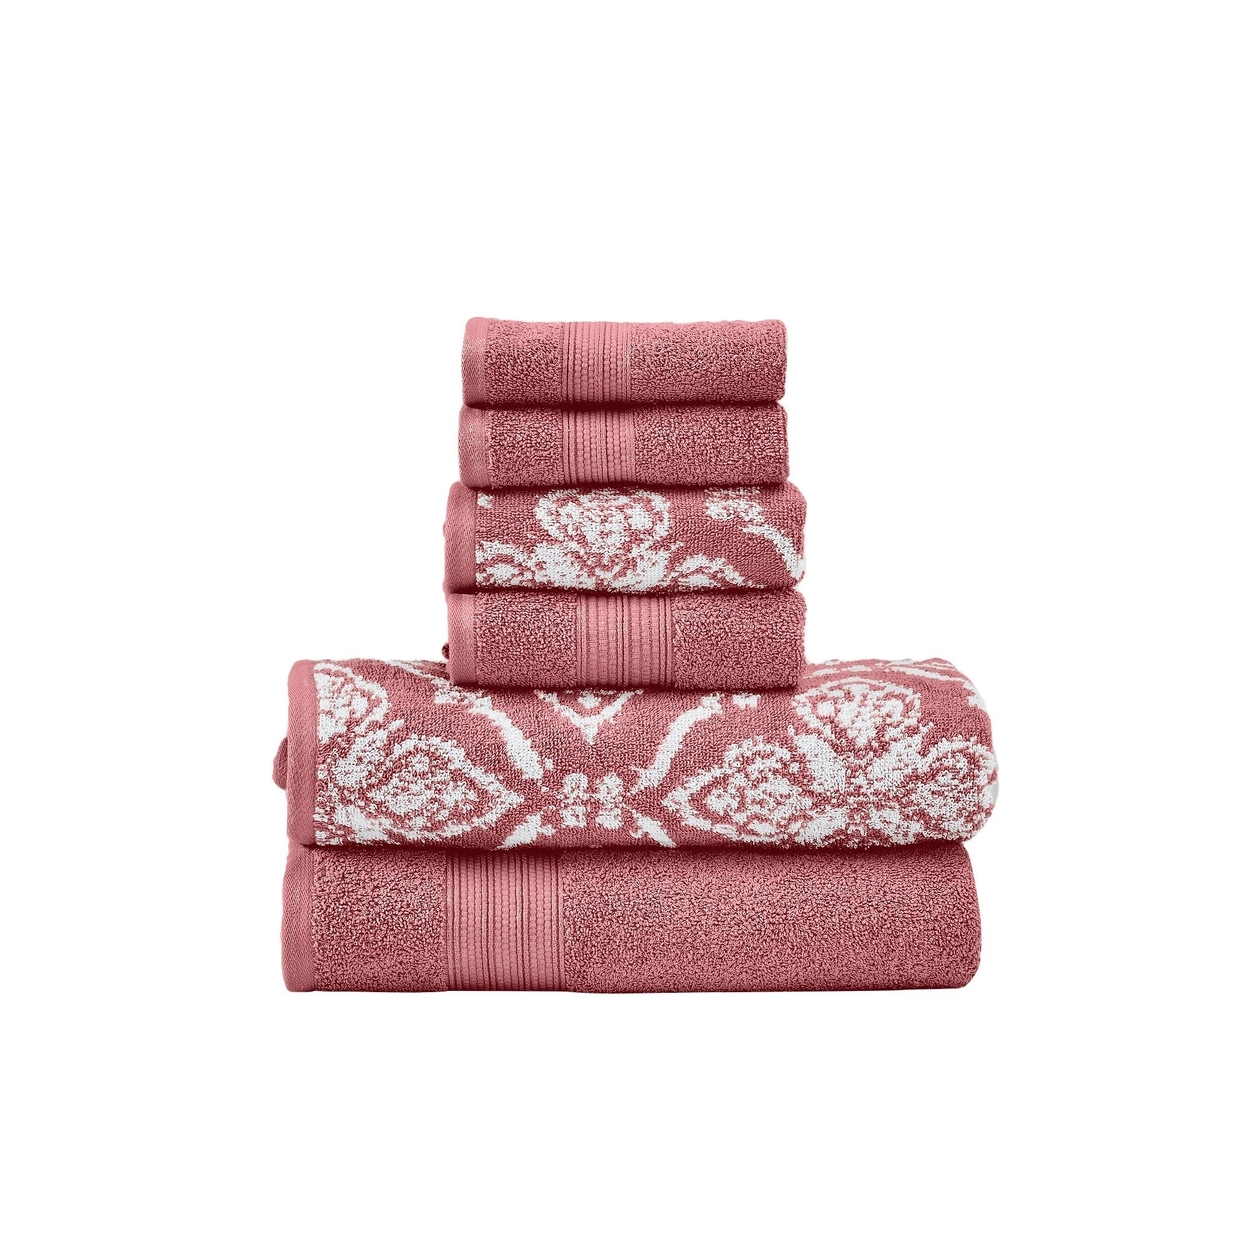 Naja 6pc Cotton Towel Set, Jacquard Pattern, White, Pink By The Urban Port- Saltoro Sherpi